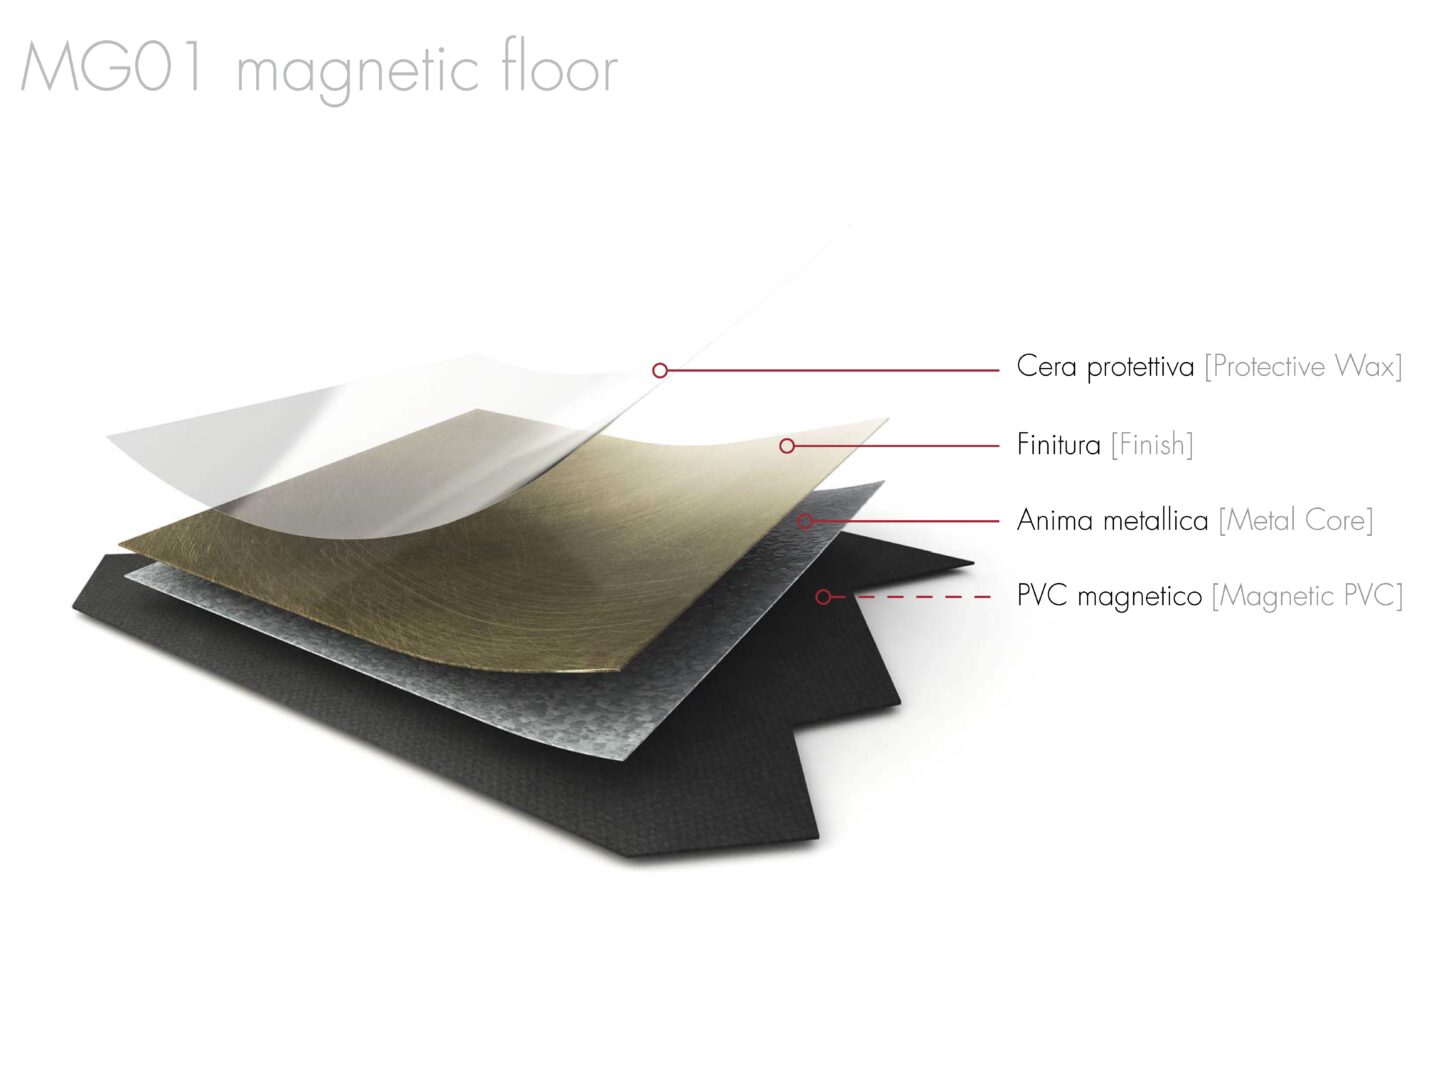 1.-MG01-Magnetic-Floor_DISEGNO-ESPLOSO